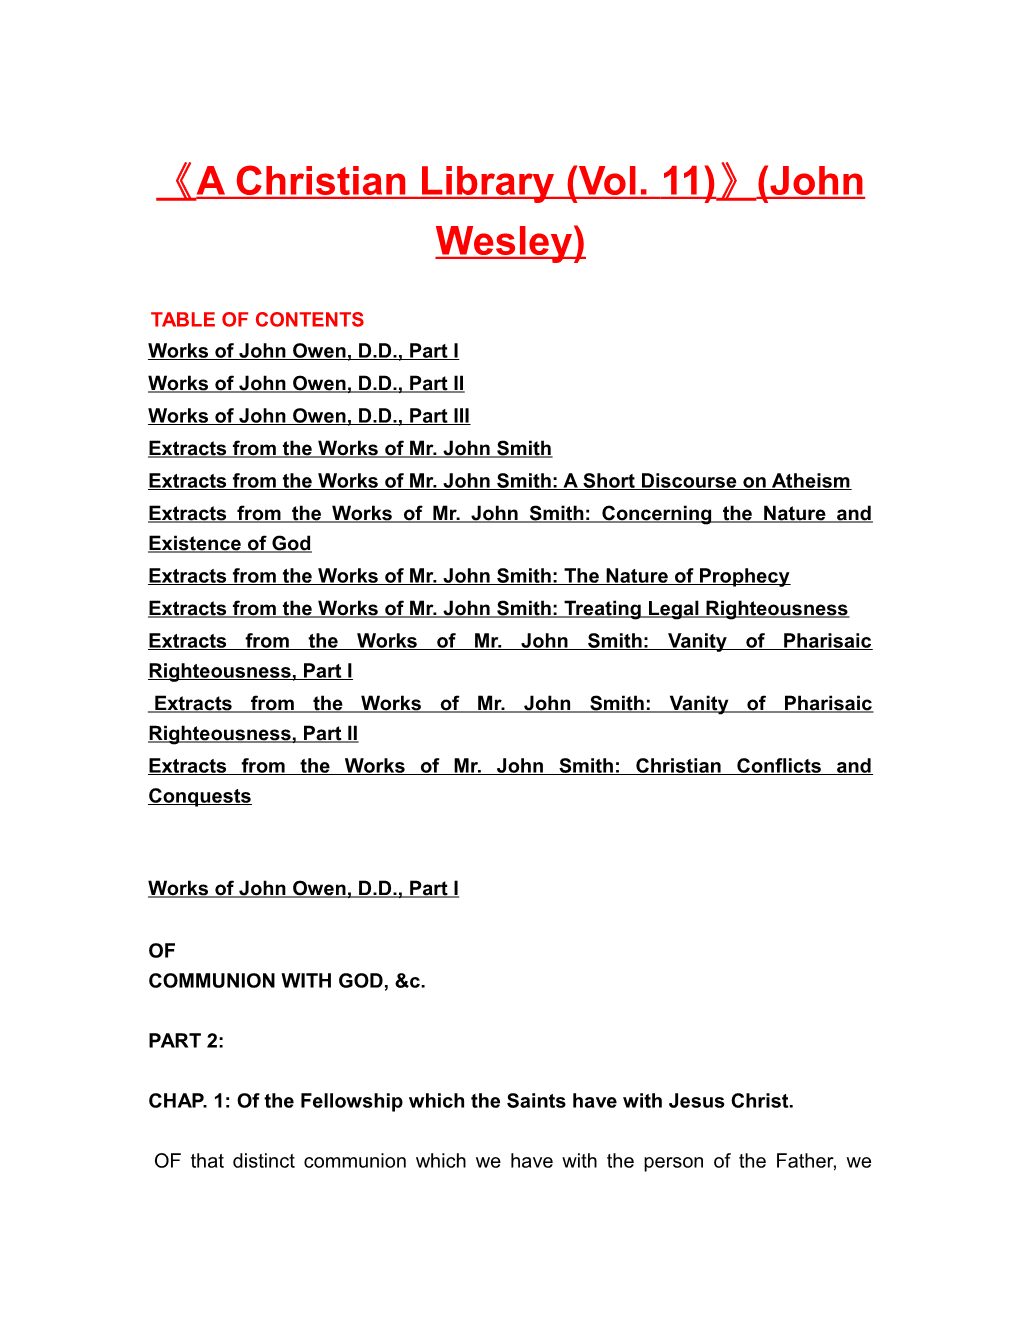 A Christian Library (Vol. 11) (John Wesley)